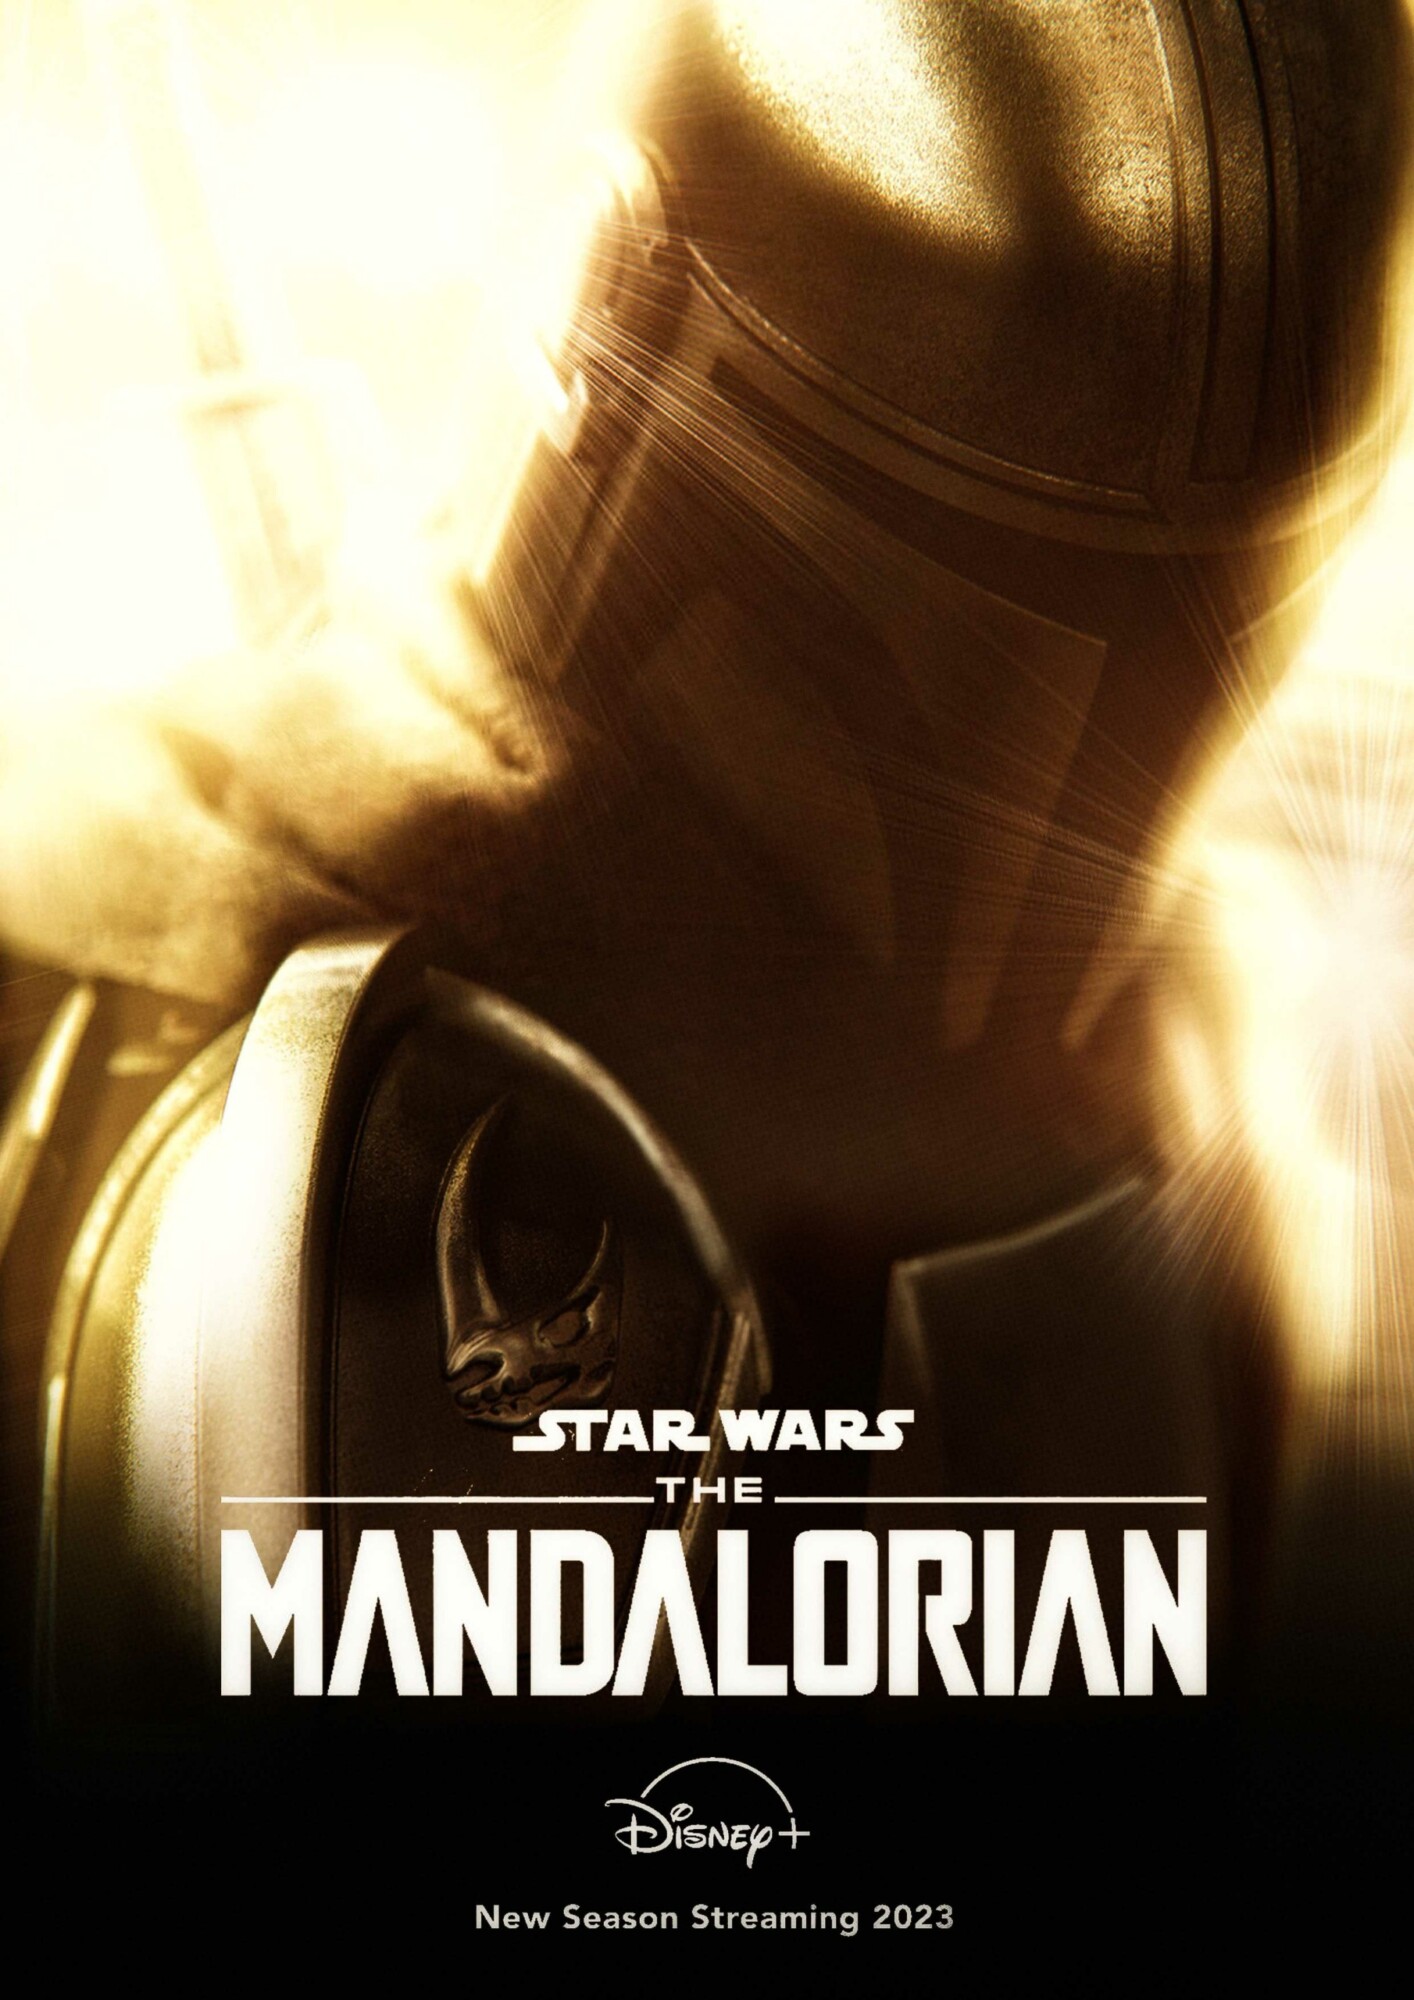 The Mandalorian Season Teaser Poster Matfeliciano Posterspy